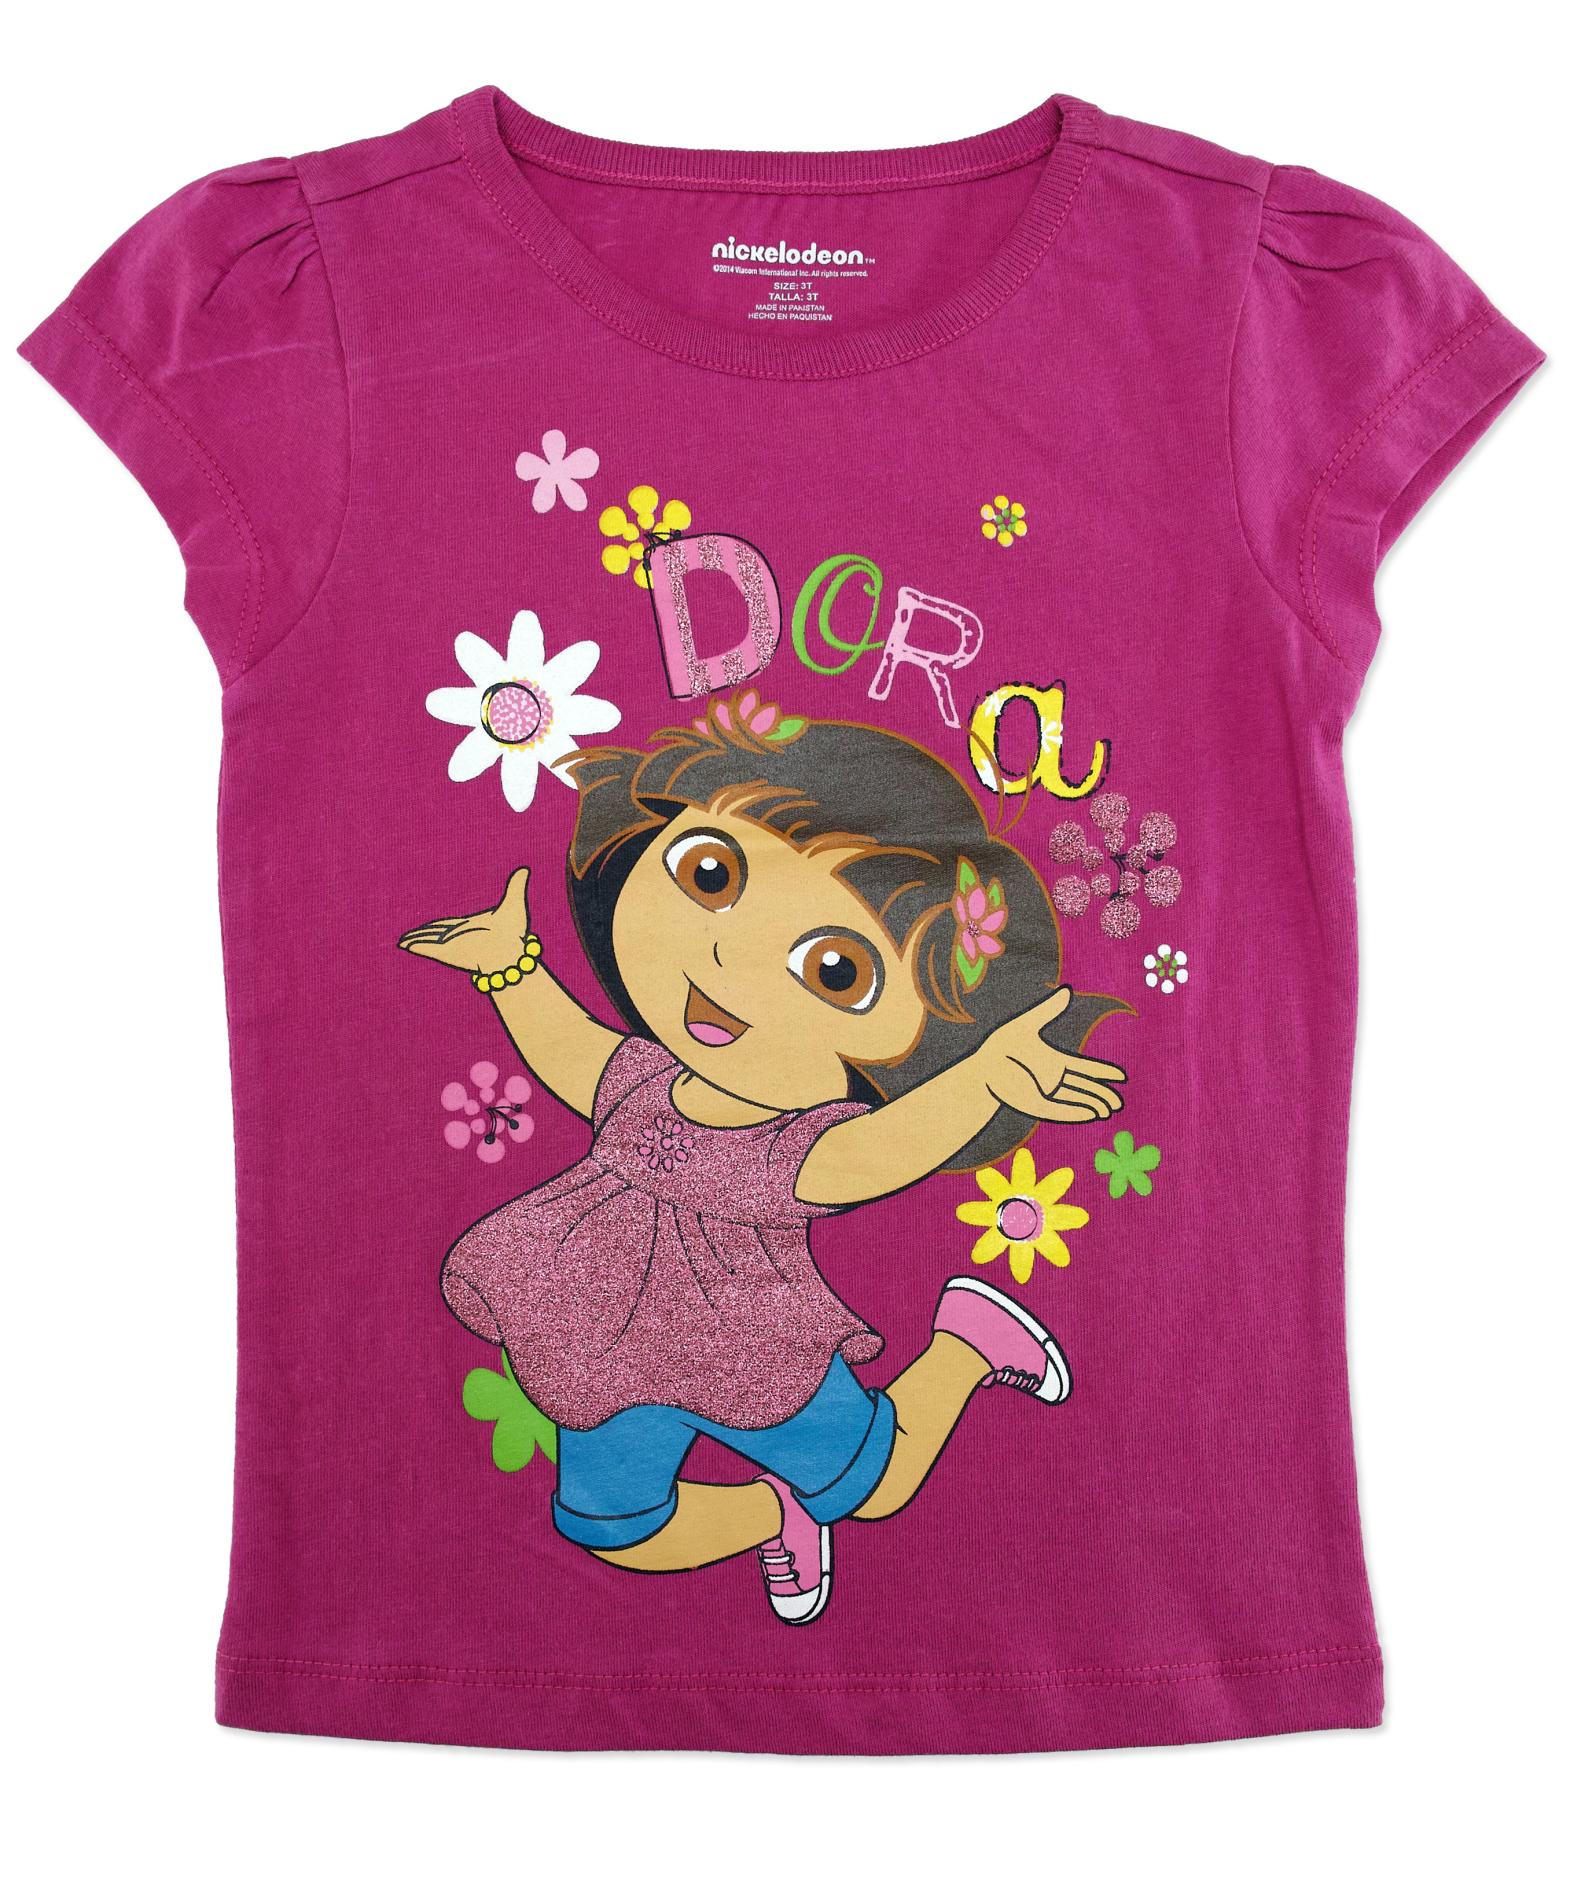 Nickelodeon Dora the Explorer Toddler Girl's T-Shirt